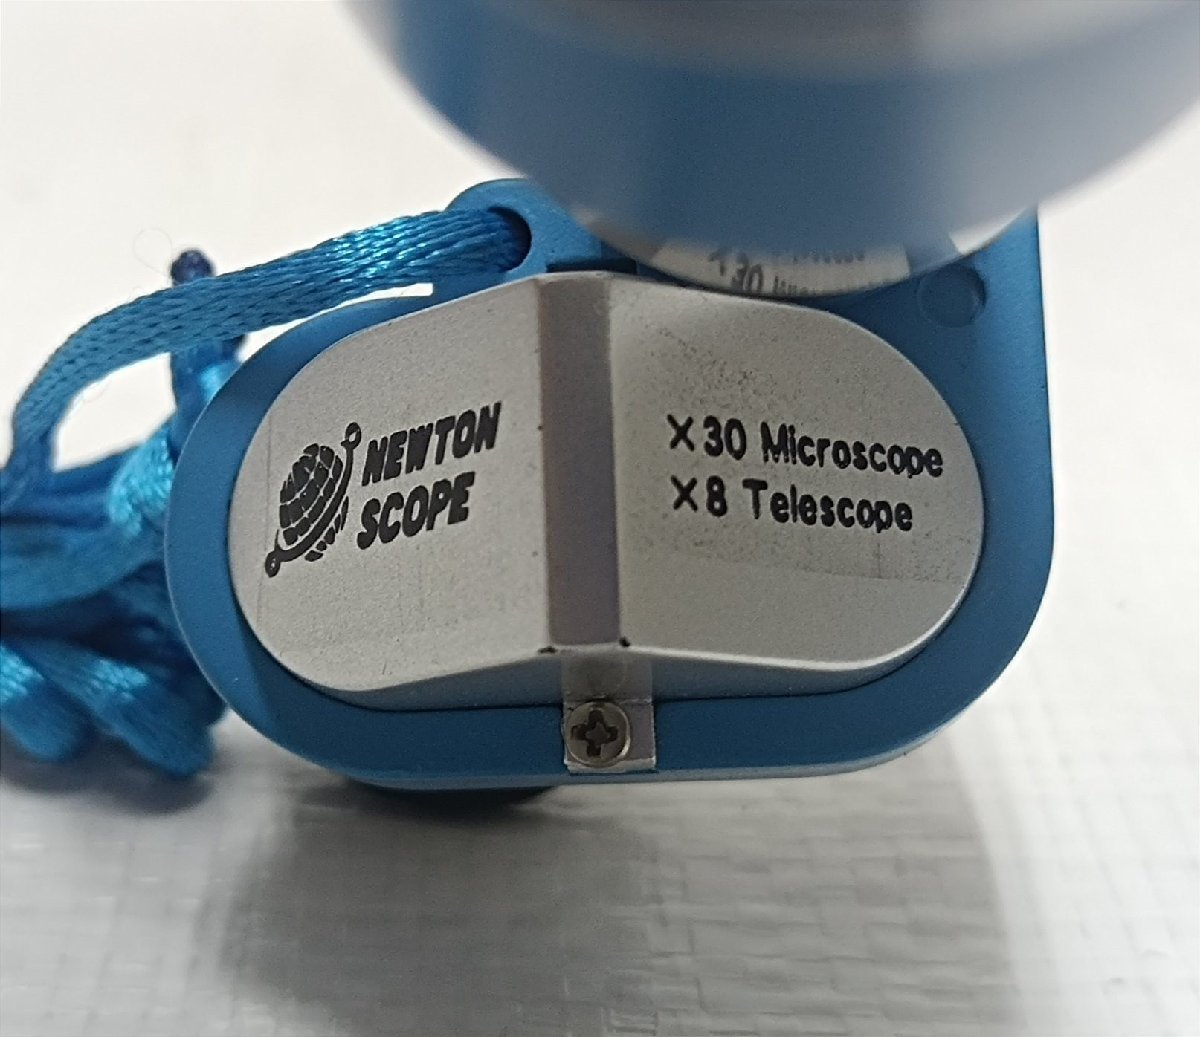 * new ton scope blue 30 times microscope |8 times telescope beautiful goods 